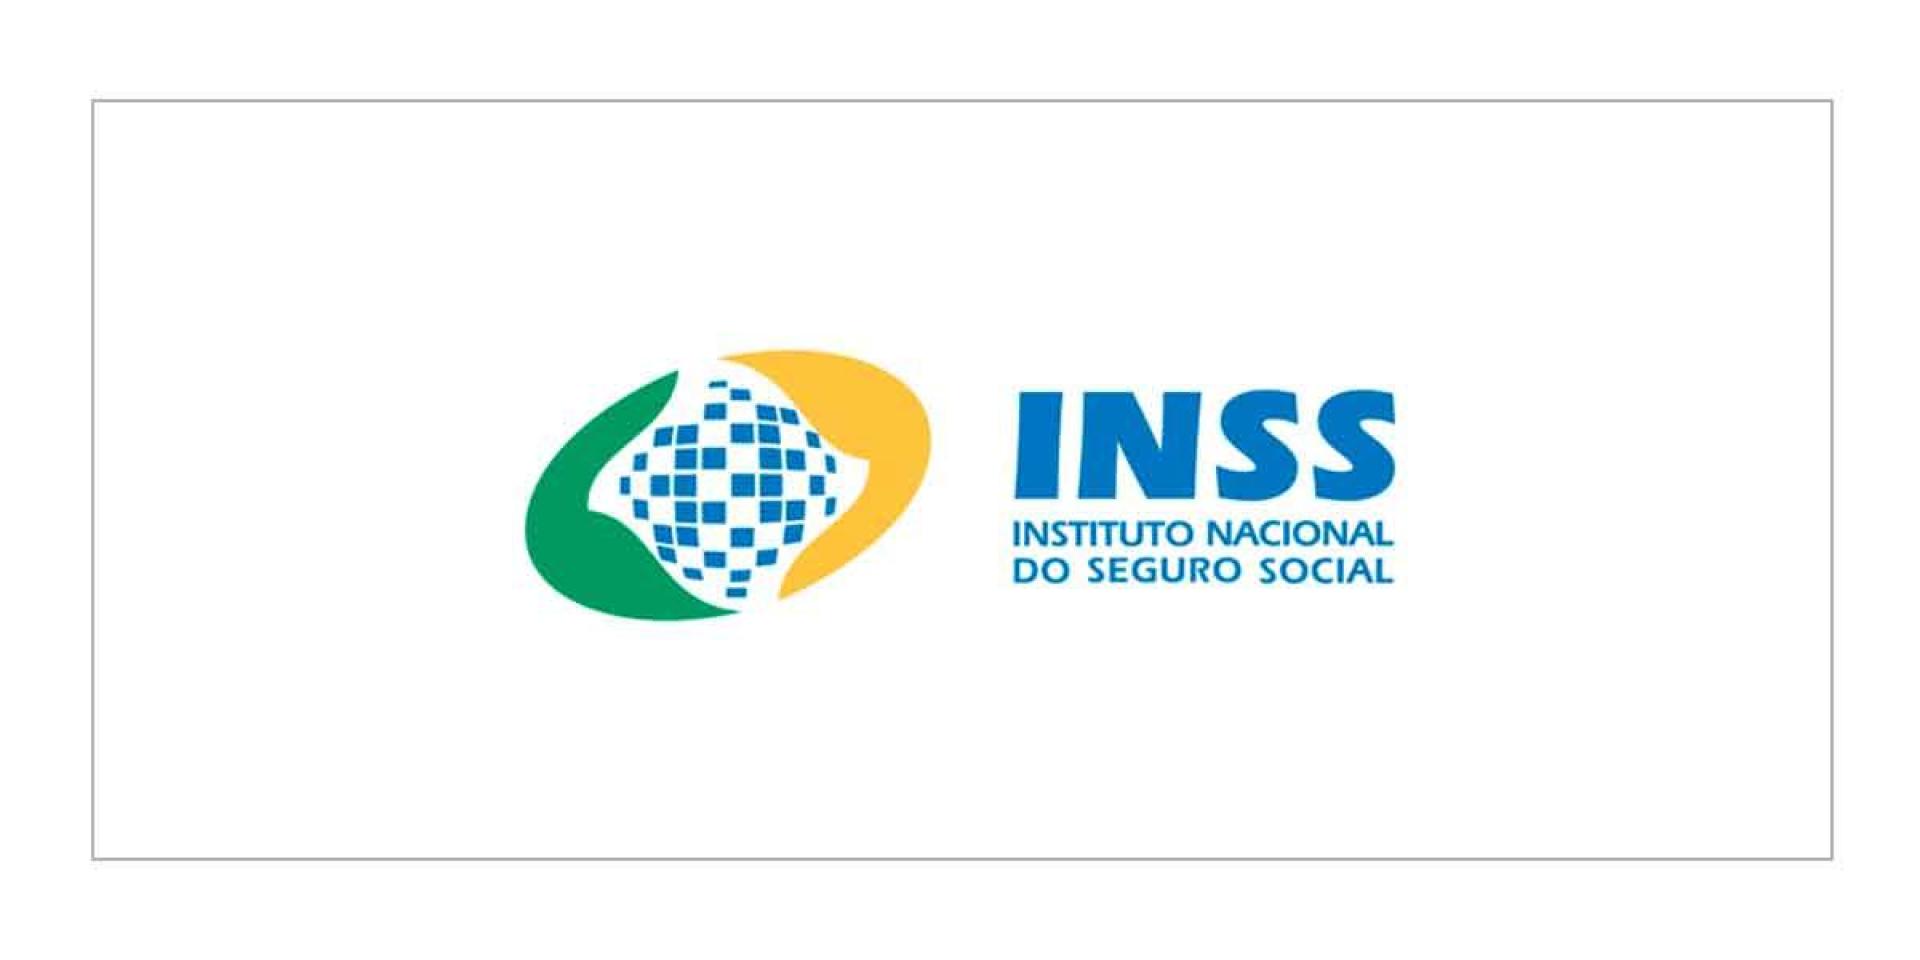 Instituto Nacional do Seguro Social - INSS